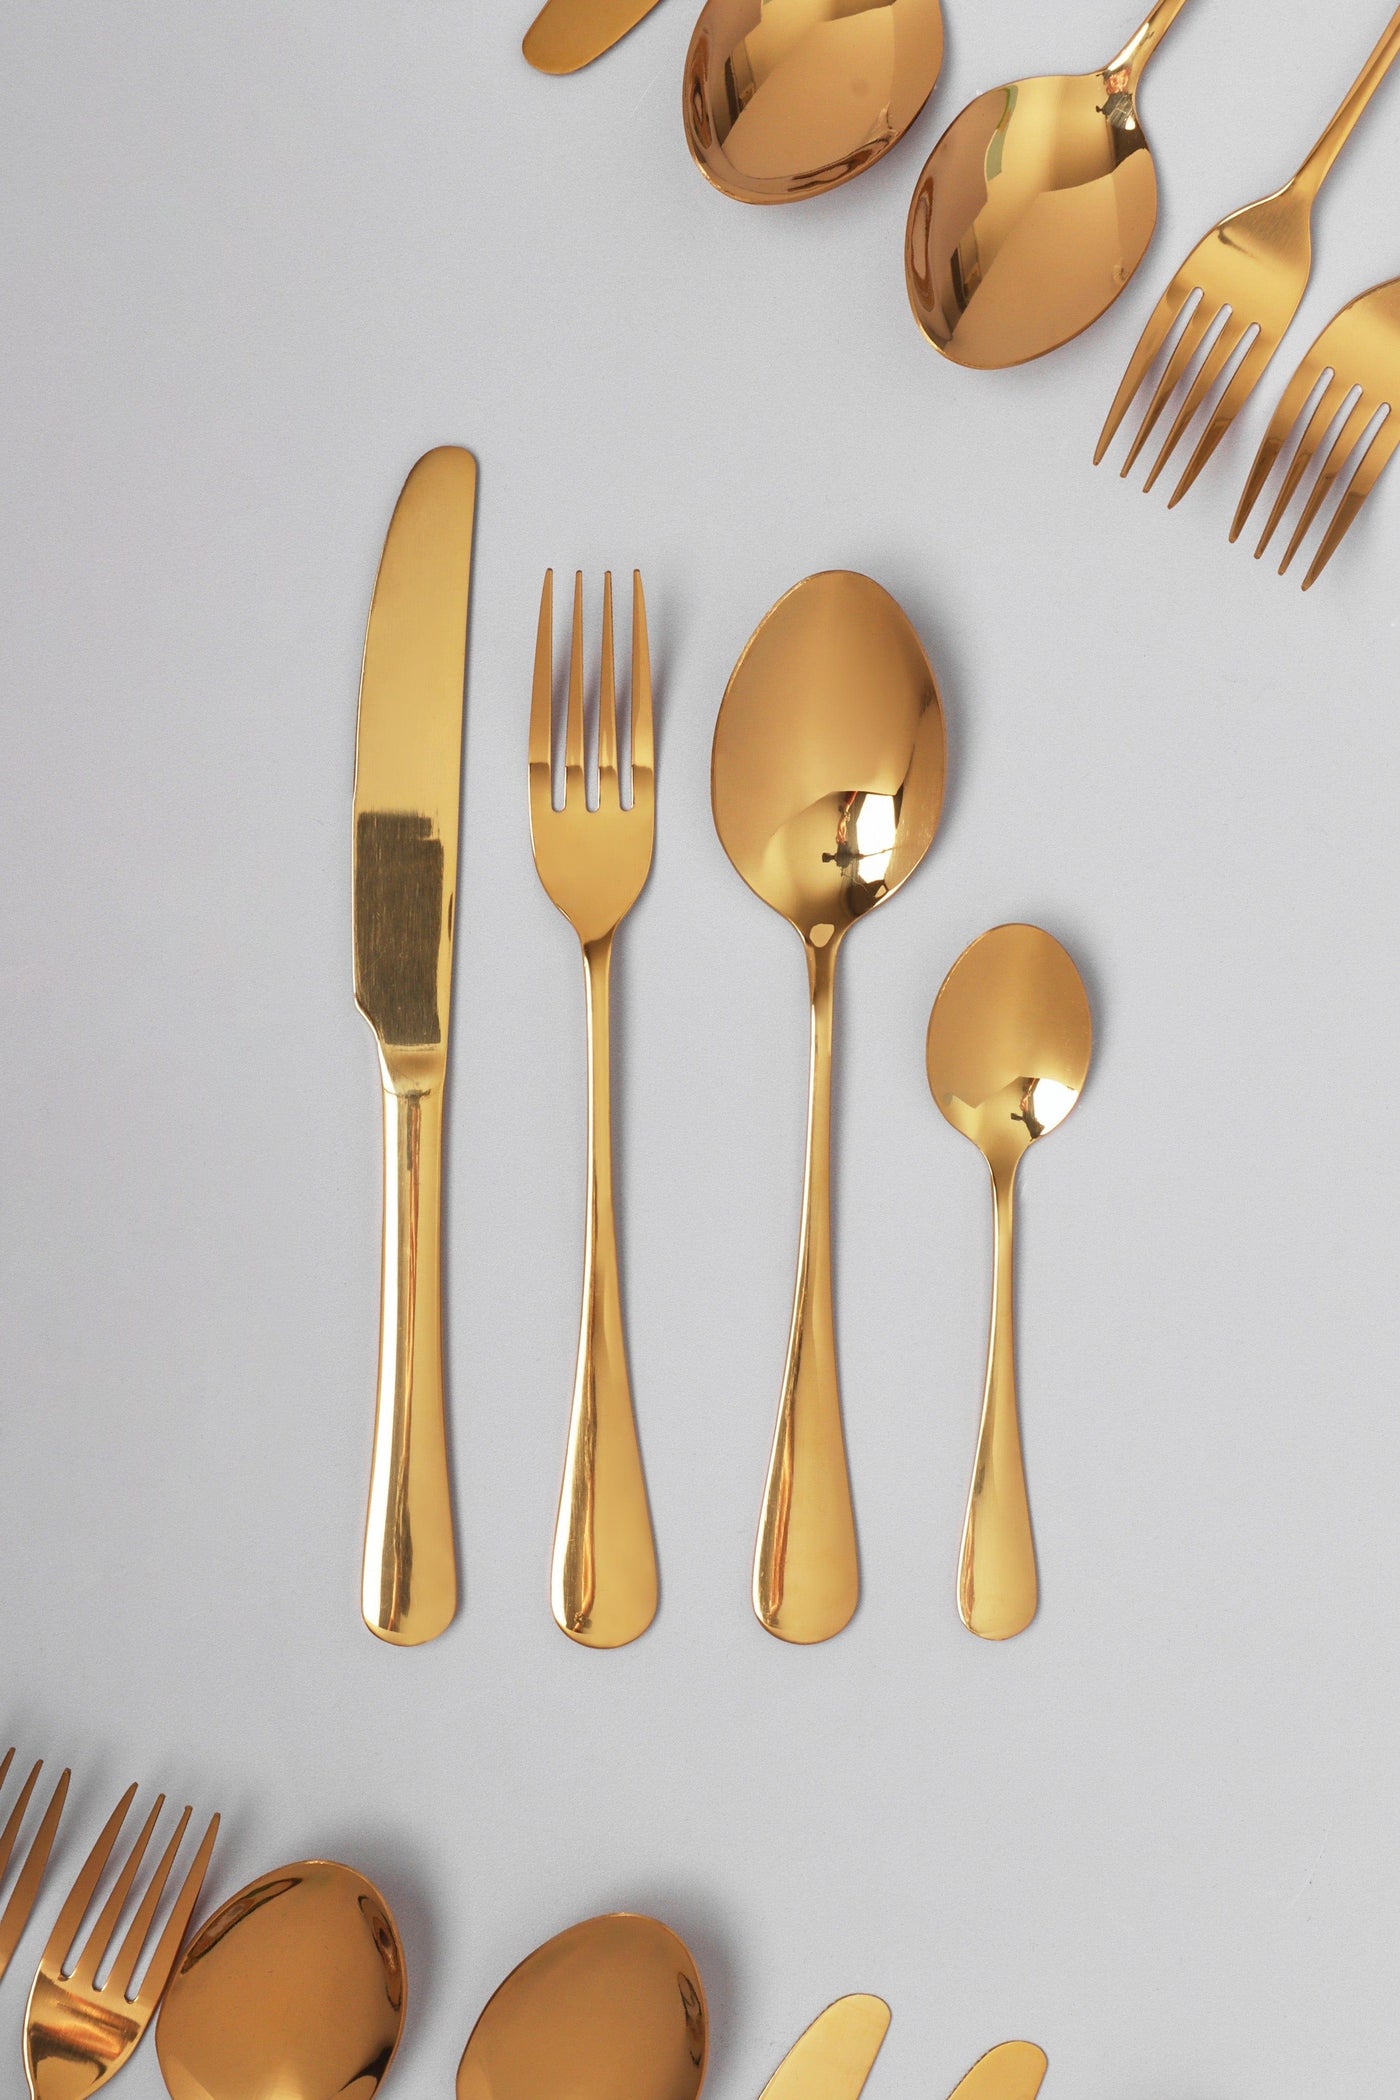 24 Piece Vermont Gold Metal Stainless Steel Flatware Cutlery Set Gift Box - G Decor